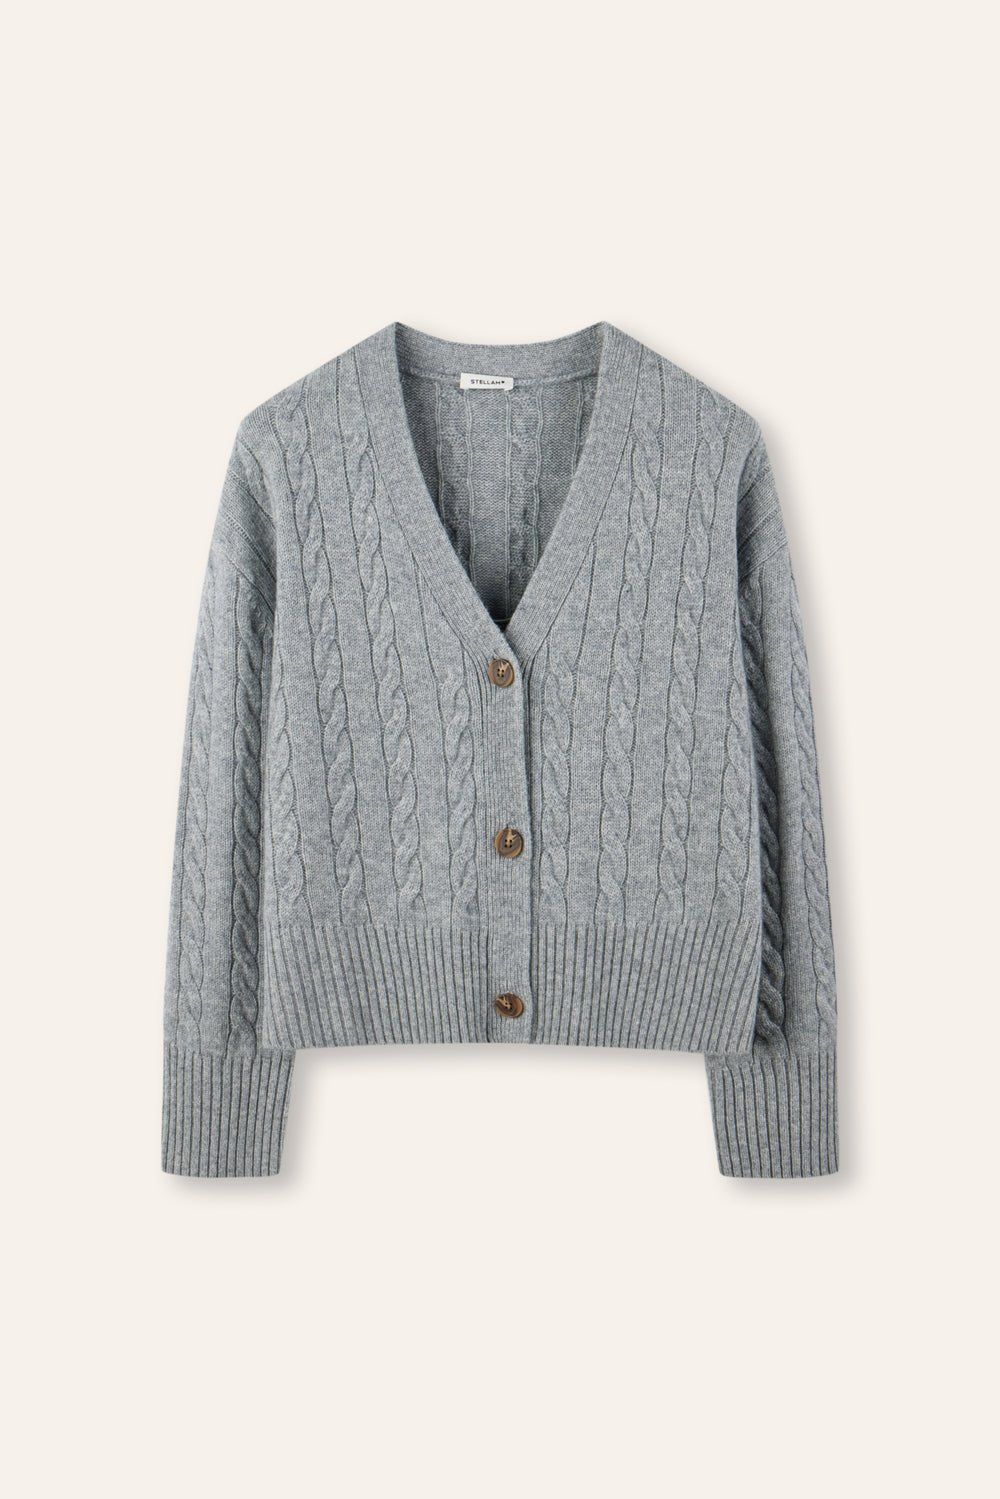 MONET oversized cashmere-blend cable-knit cardigan (Light grey) - STELLAM